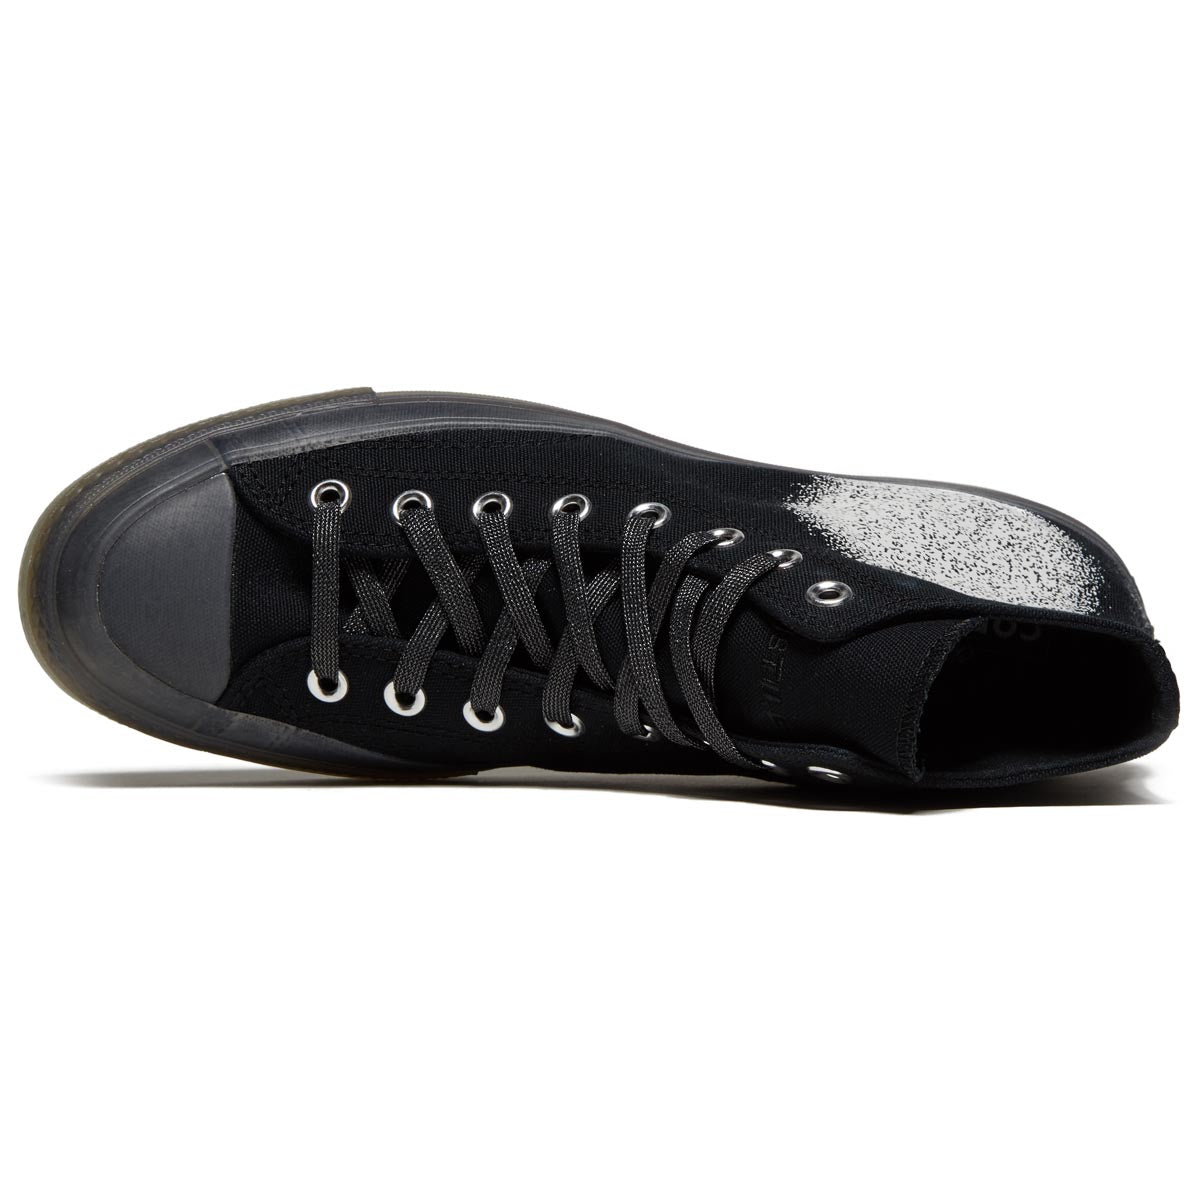 Converse x Turnstile Chuck 70 Hi Shoes - Black/Grey/White image 3